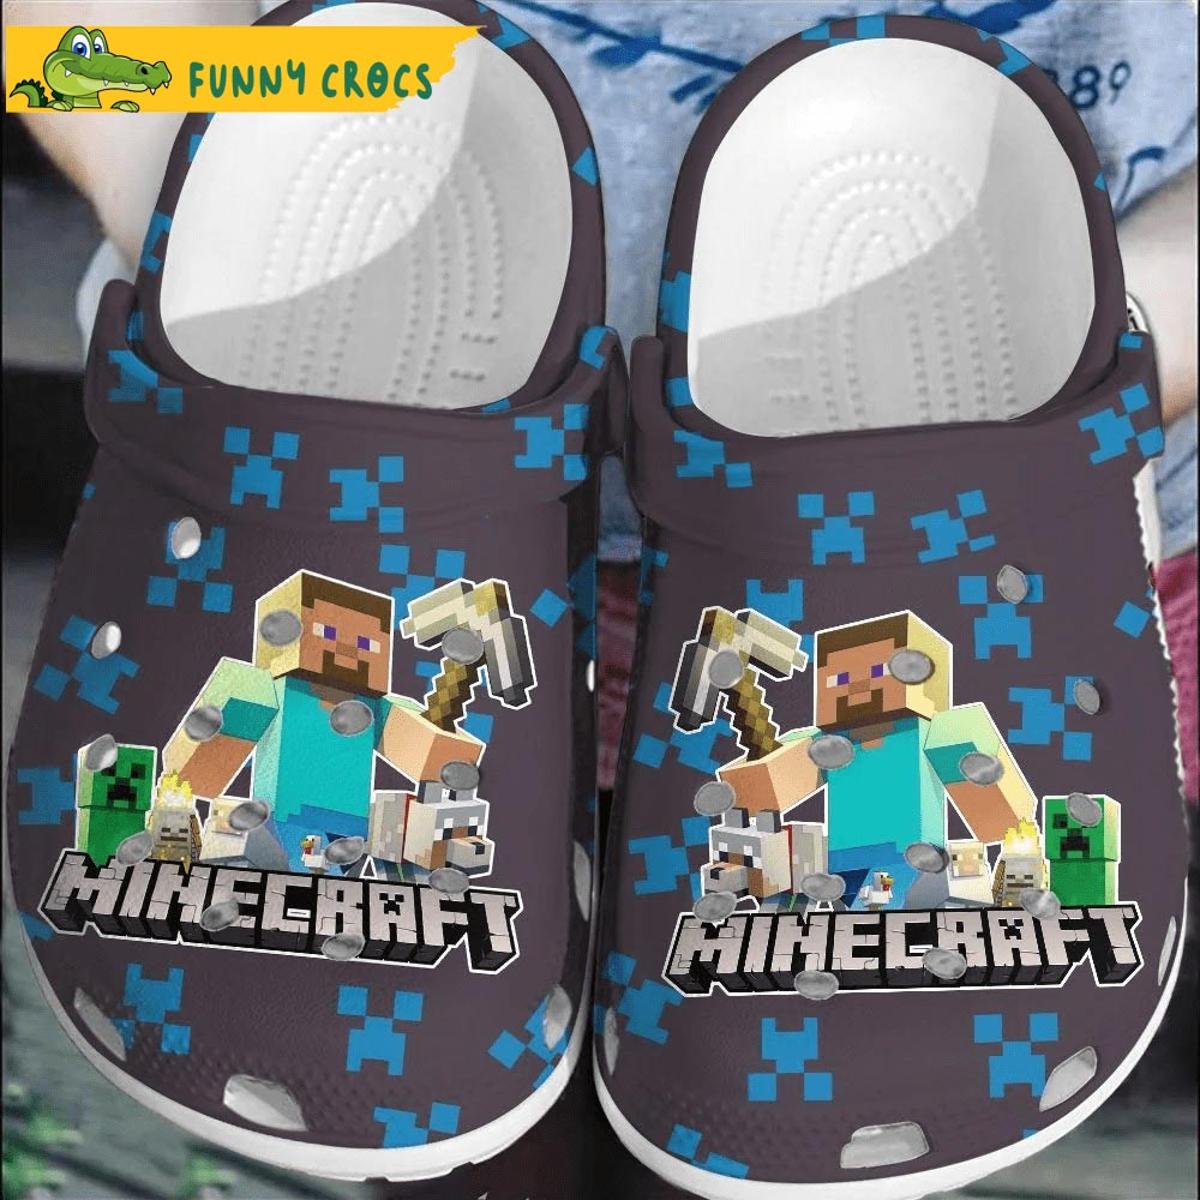 Green Minecraft Crocs Slippers